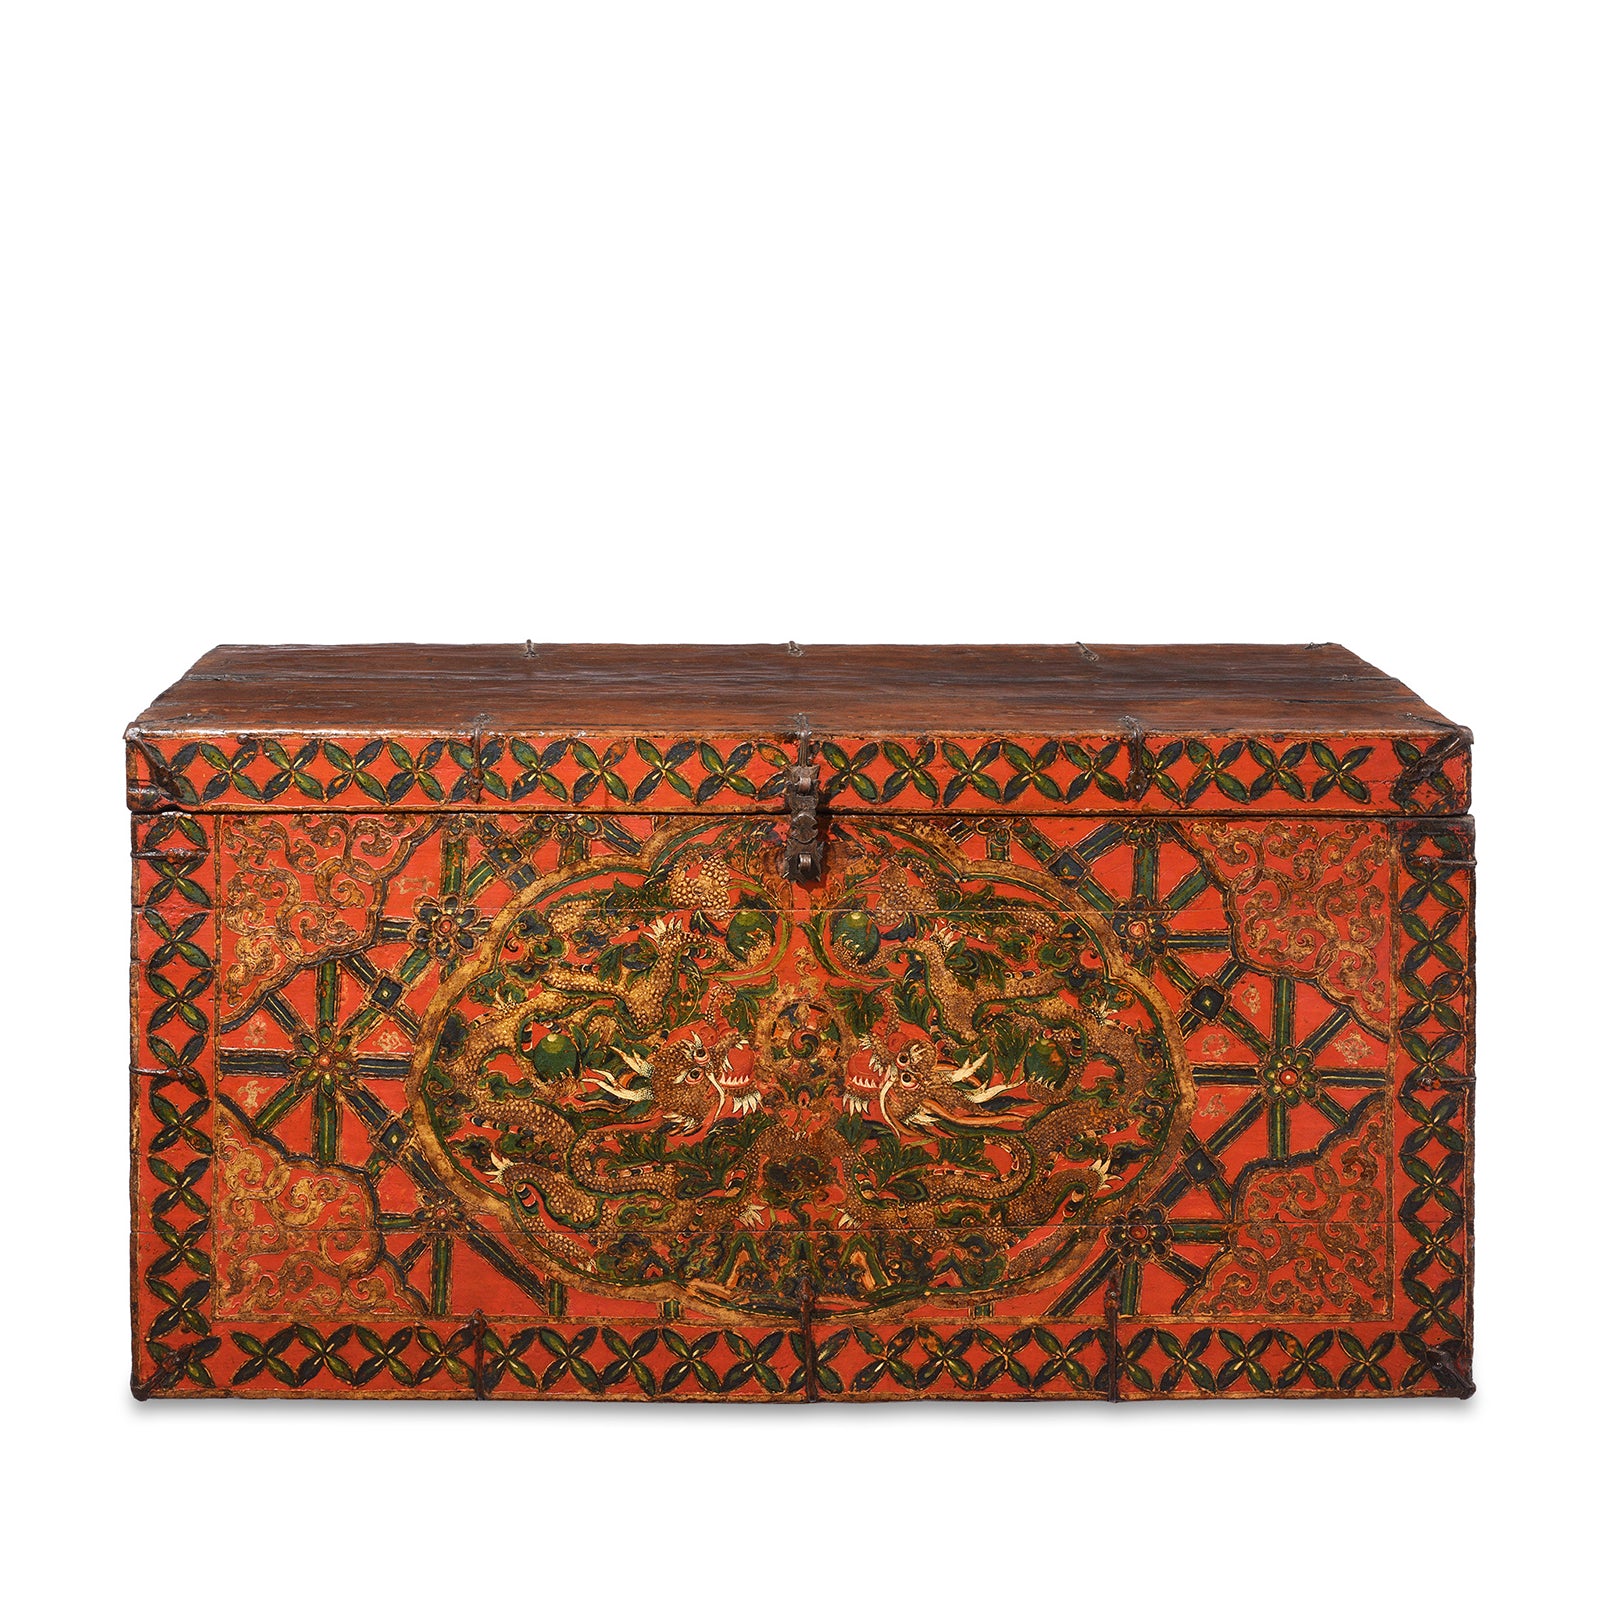 Antique Painted Tibetan 'Double Dragon' Storage Chest - 17thC | Indigo Antiques